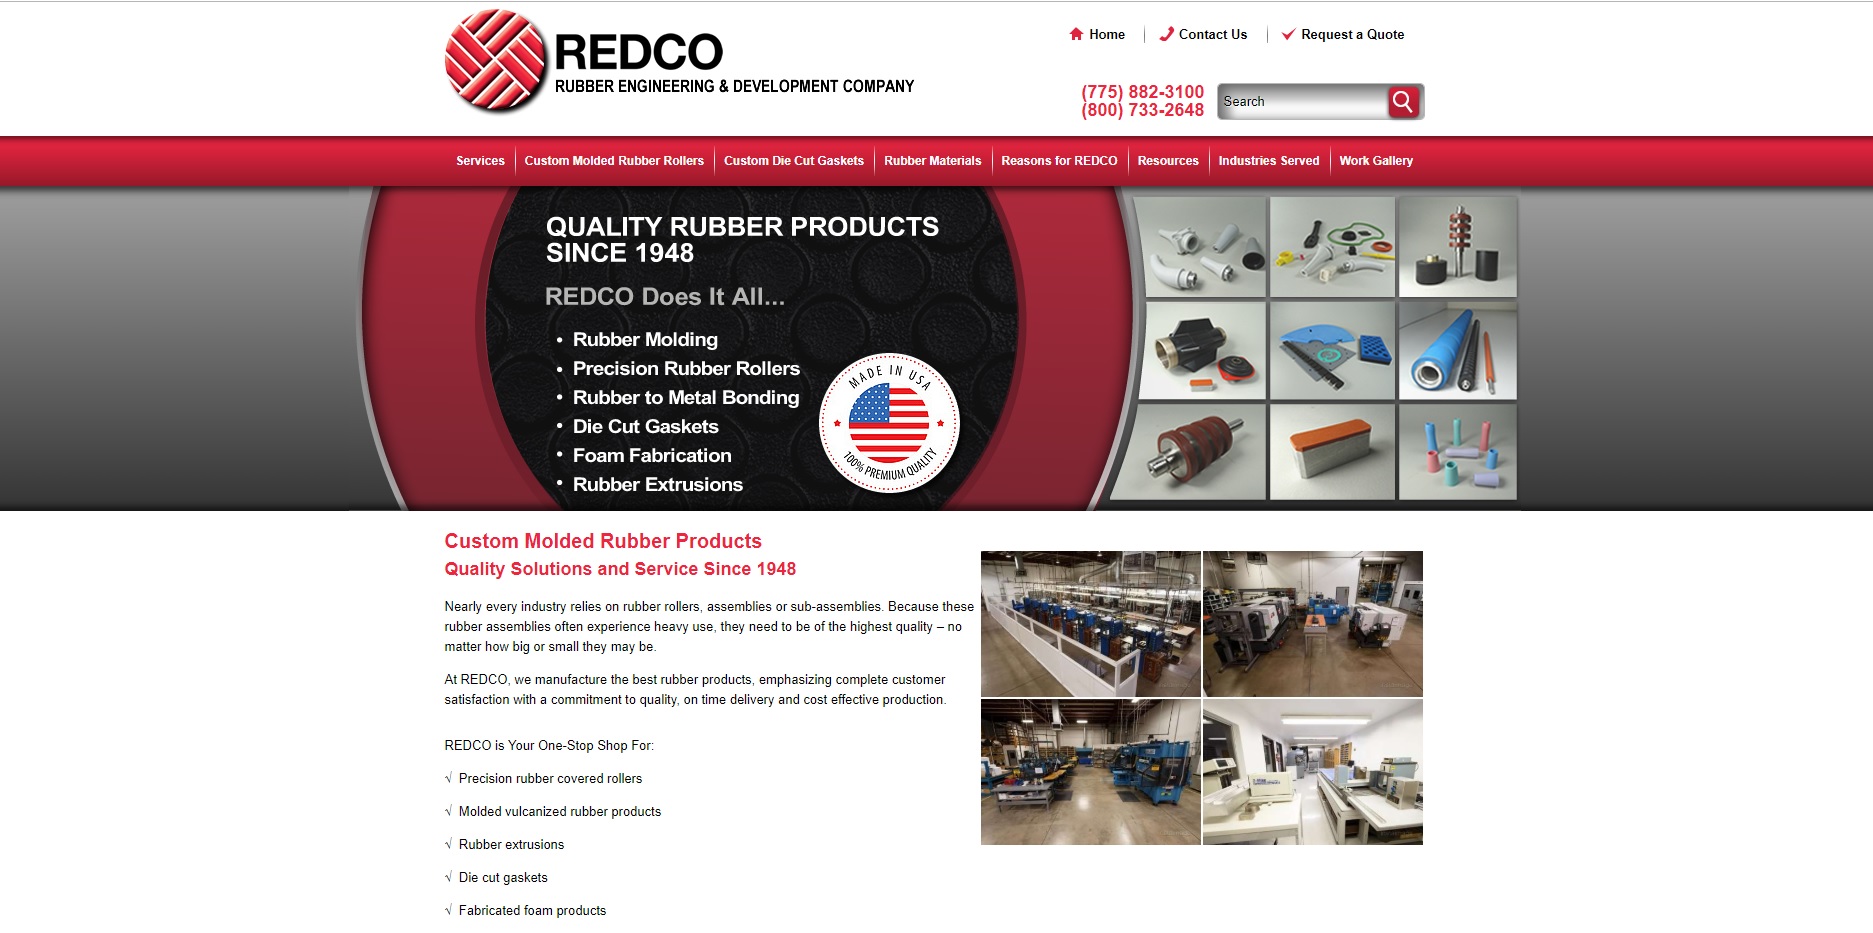 REDCO Rubber Engineering & Development Company